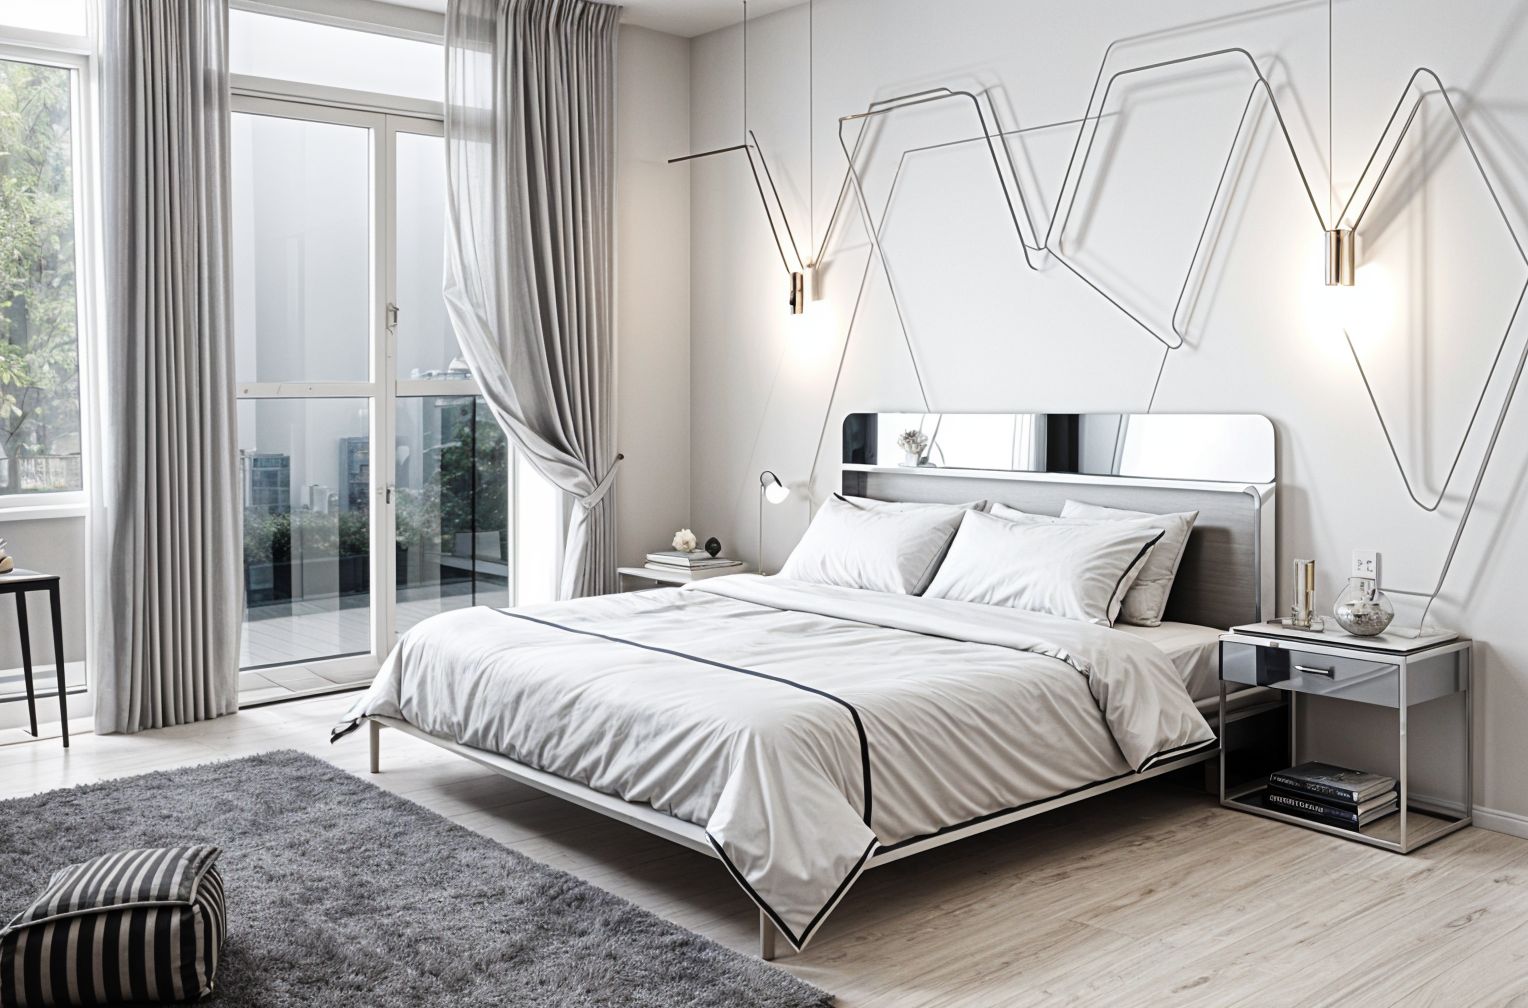 Futuristic style Bedroom